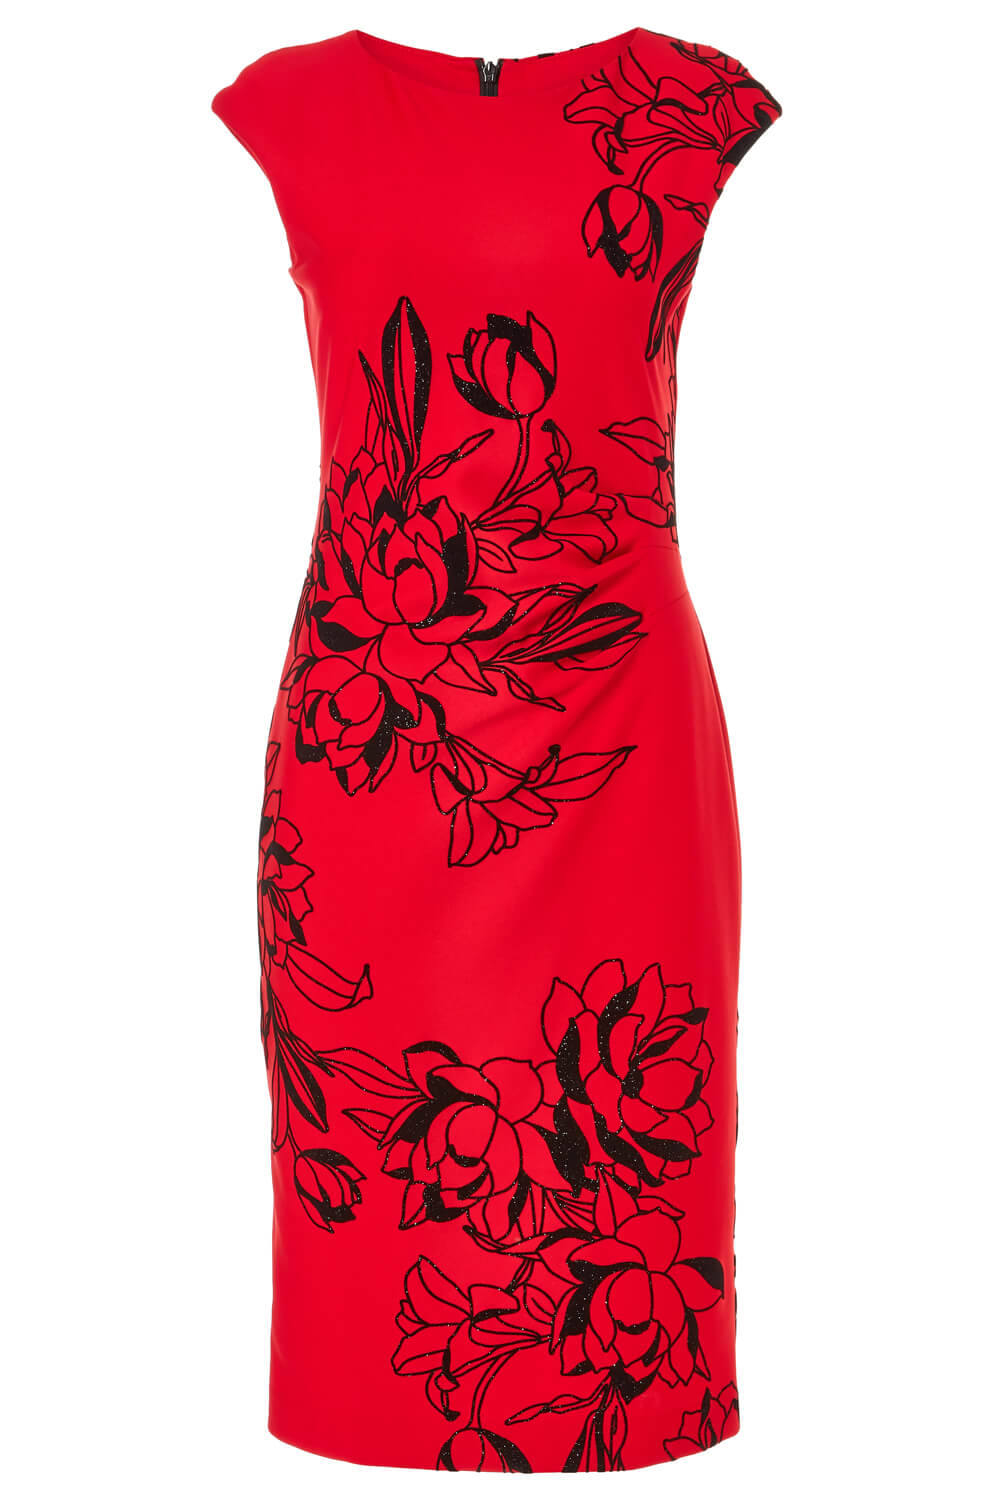 Floral Print Fitted Scuba Dress in Red - Roman Originals UK